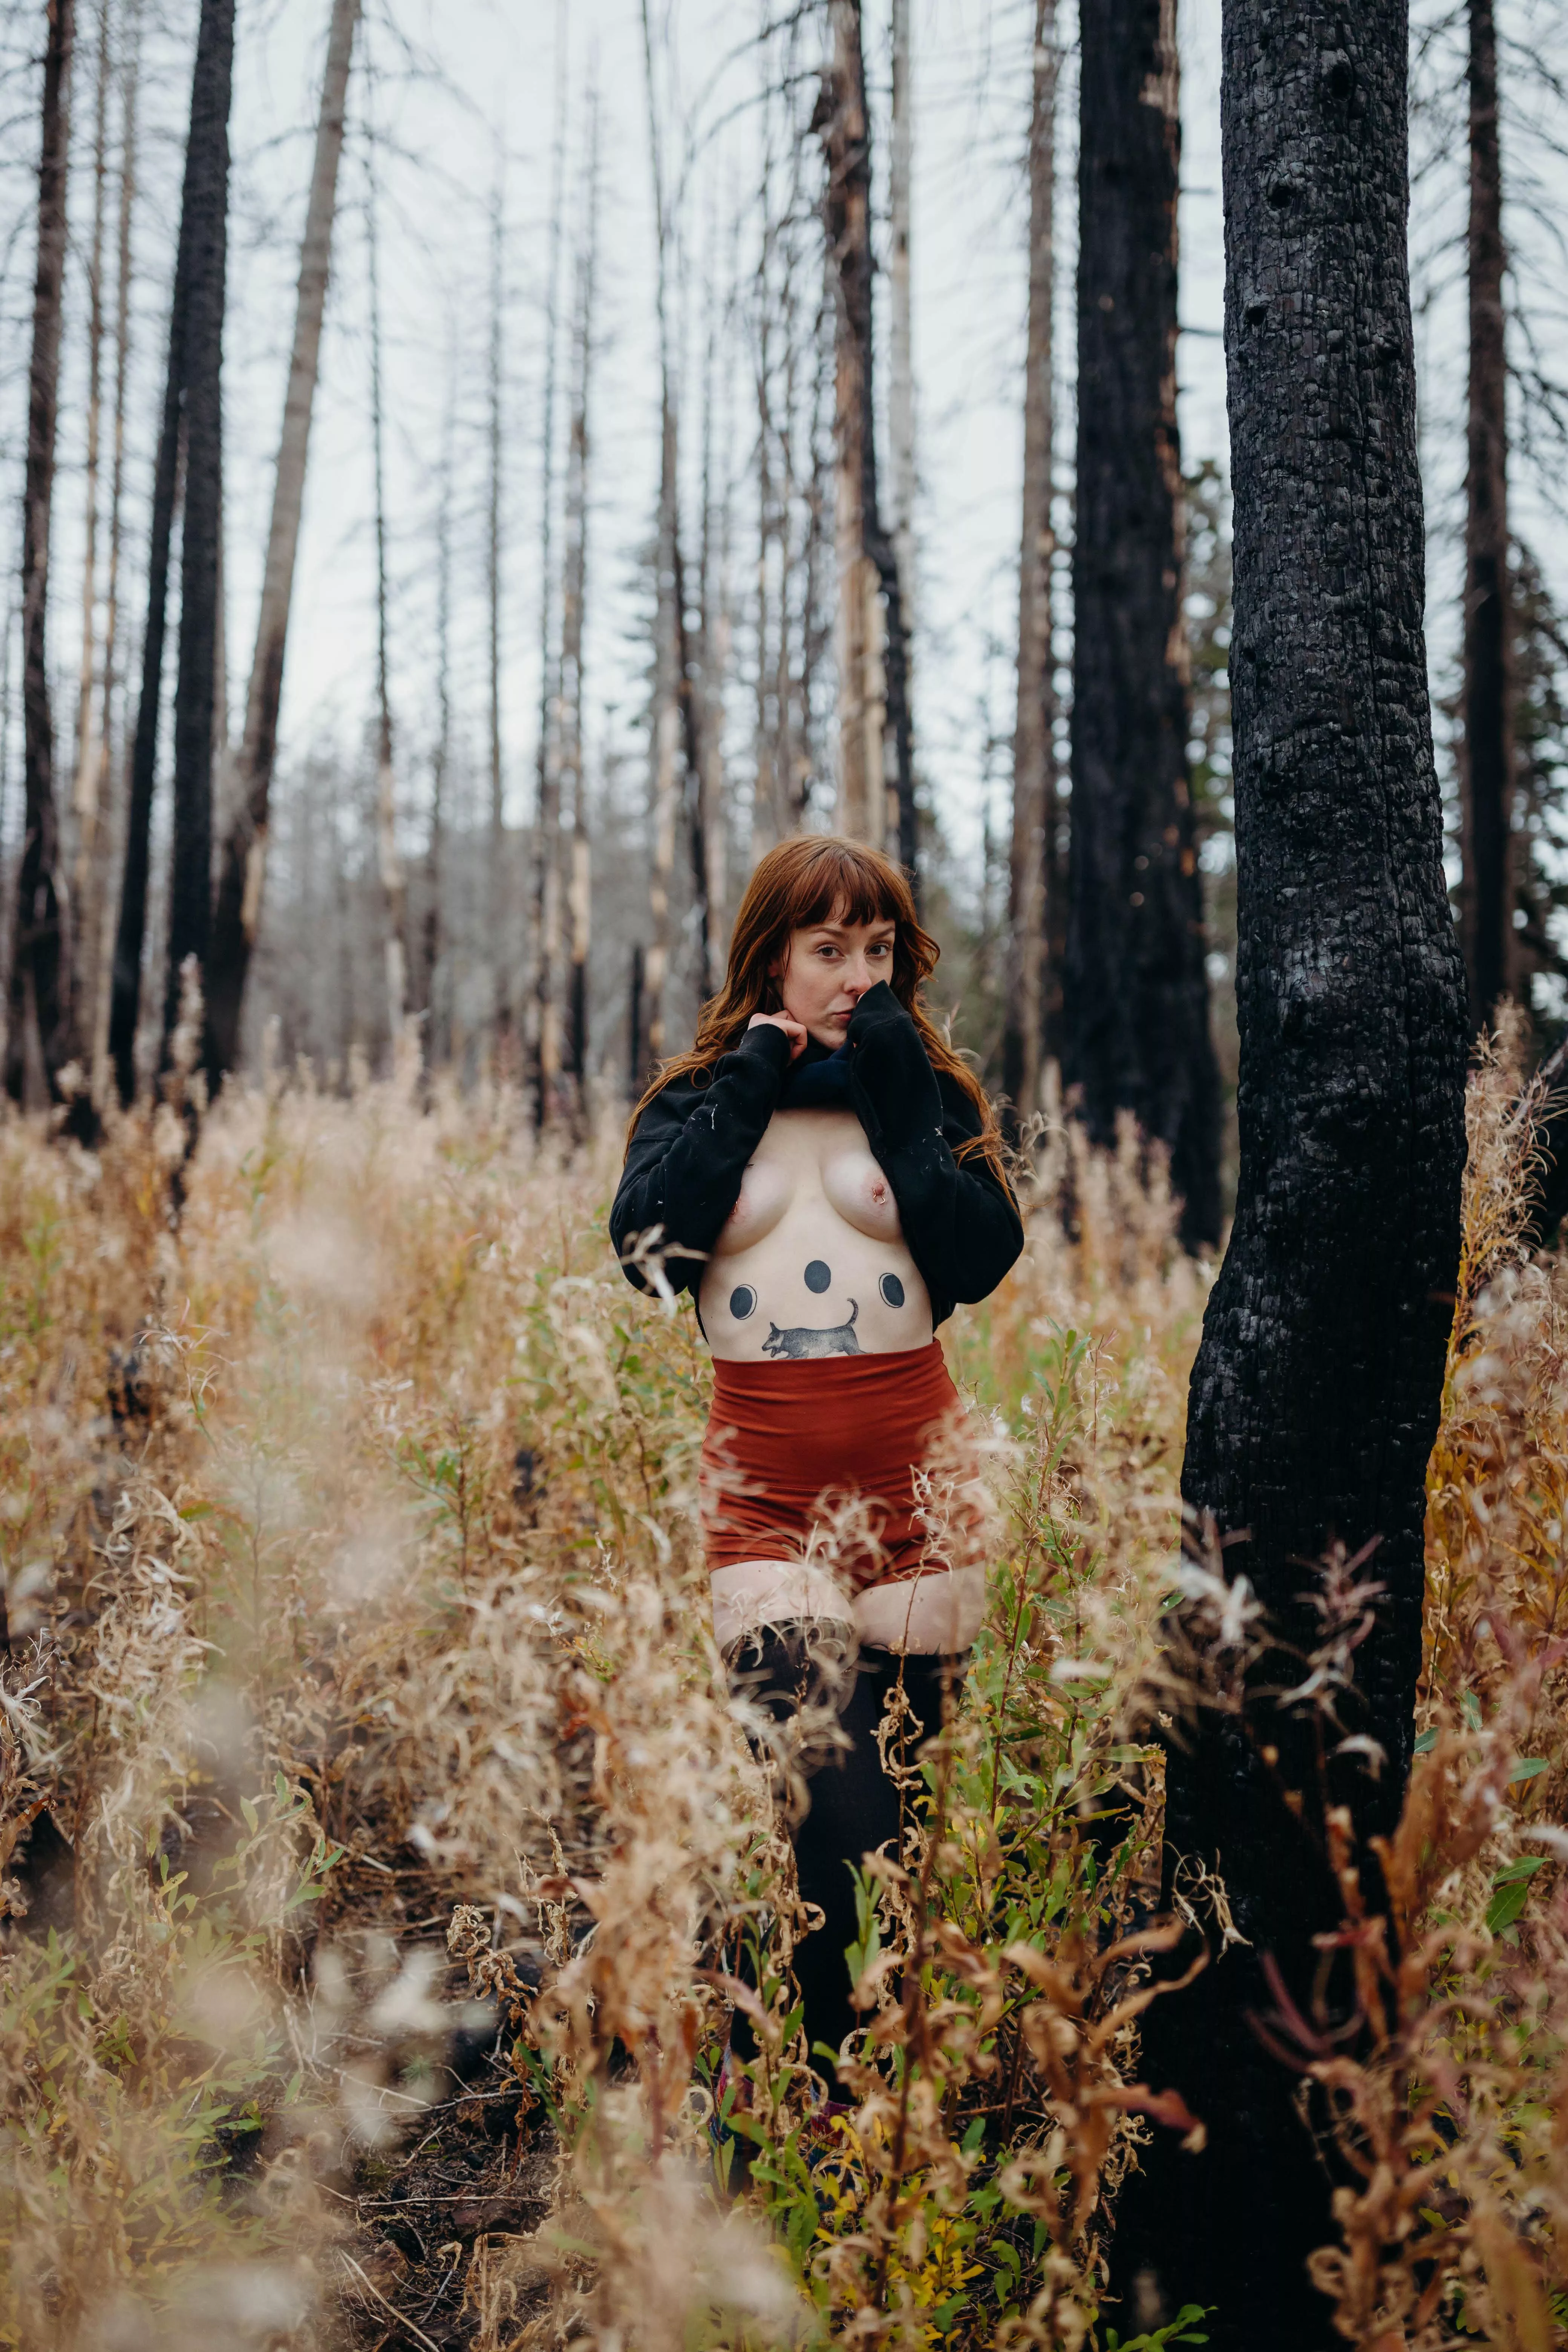 Hippie hiker dream girl here to lure you into the woods! ðŸŒ²ðŸ¥¾ðŸ’¦ðŸ˜½ nudes |  GLAMOURHOUND.COM